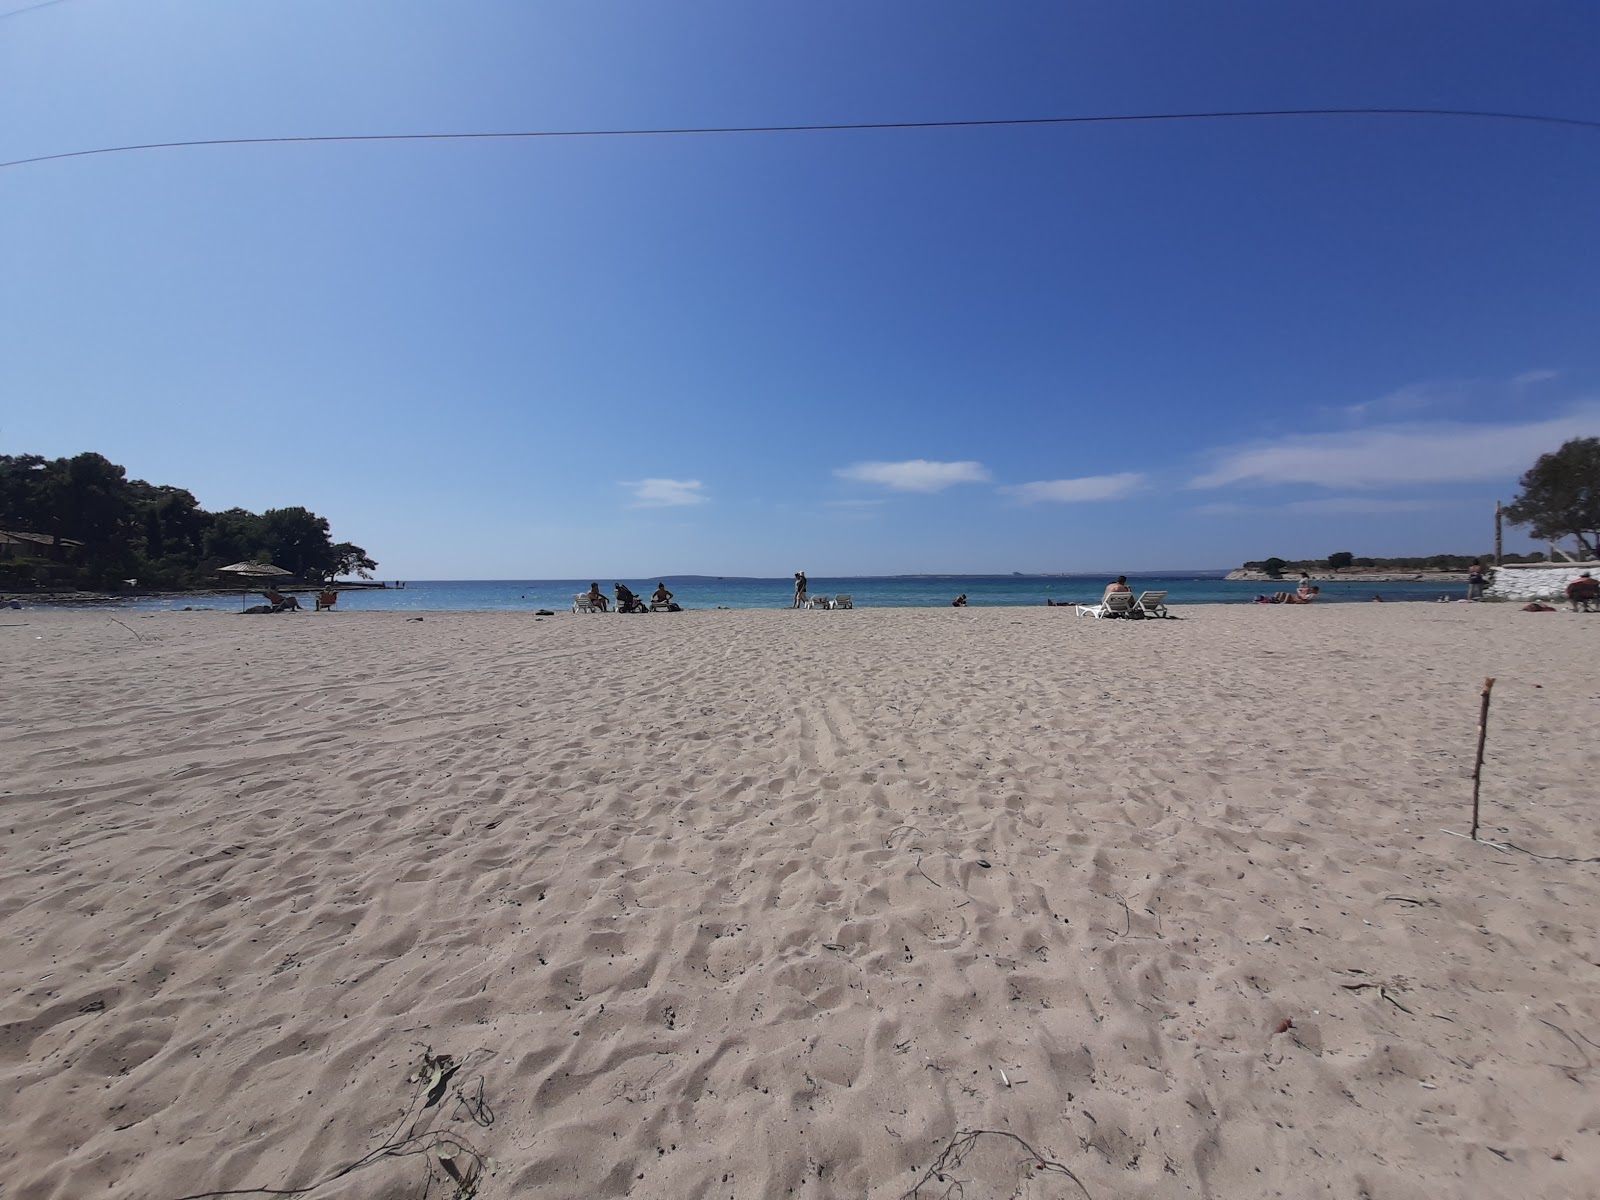 Fotografie cu St. pauli beach cu nivelul de curățenie in medie